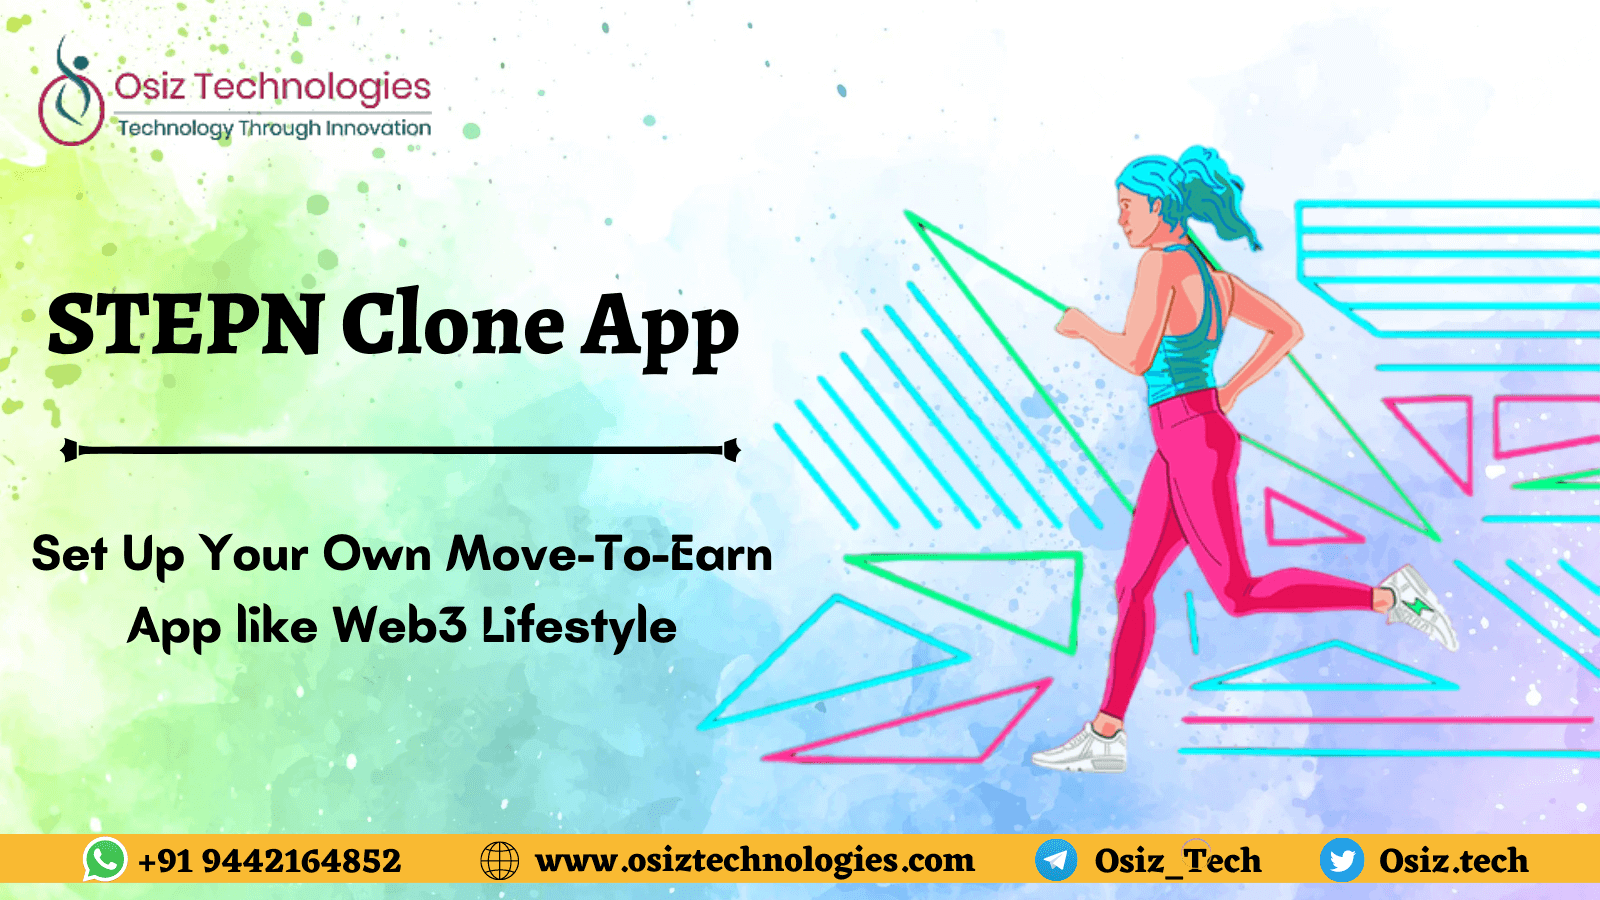 STEPN Clone App - Build Move-to-Earn platform like STEPN - Osiz